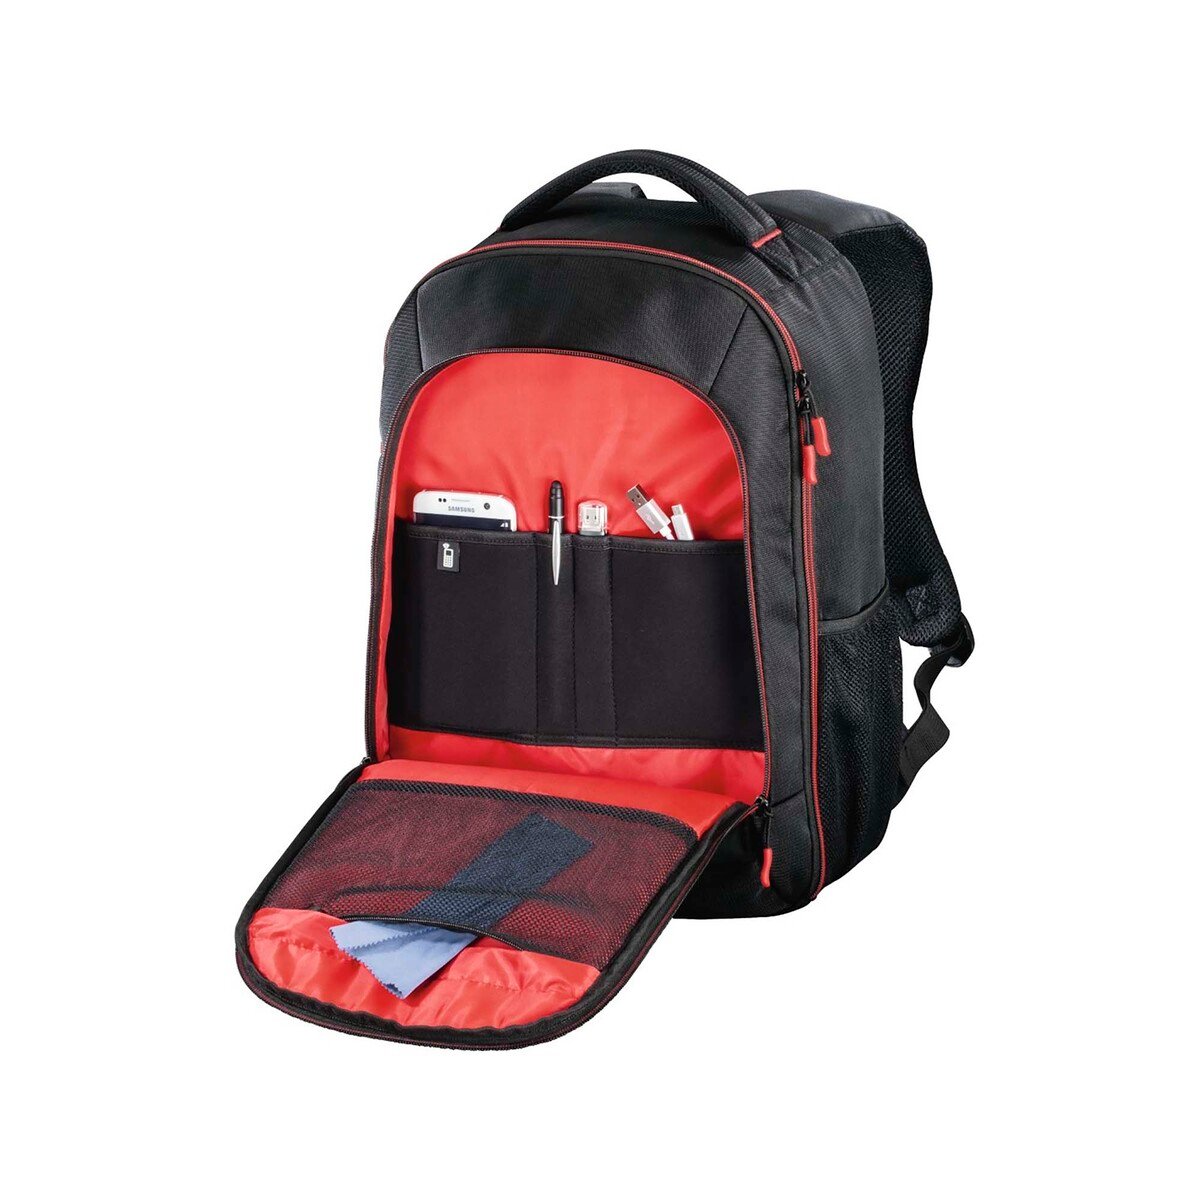 Hama Miami 139855 Camera Backpack, 190, Black/red